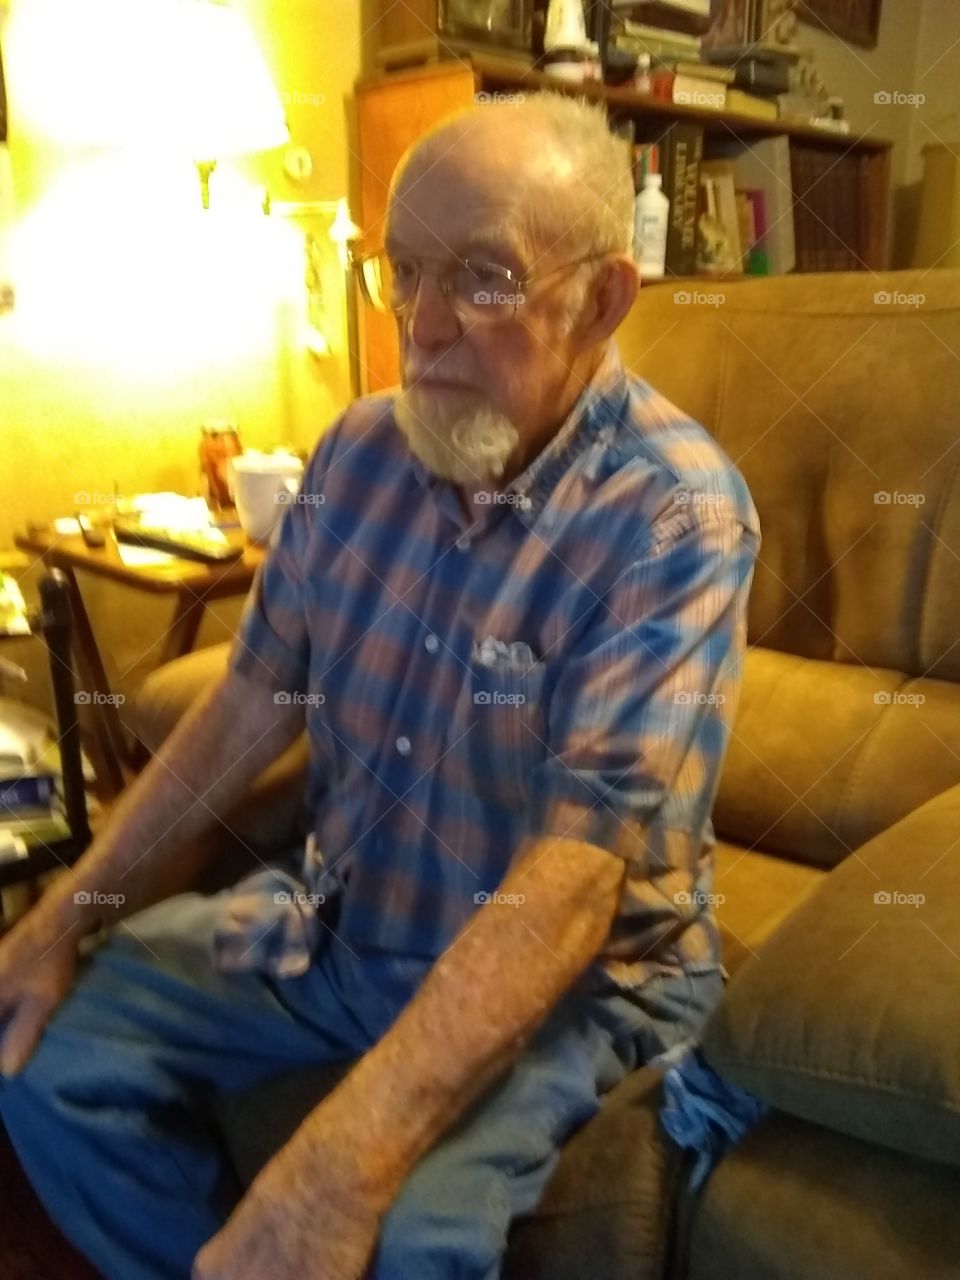 grandpa grandpa very old 
love him to death an back